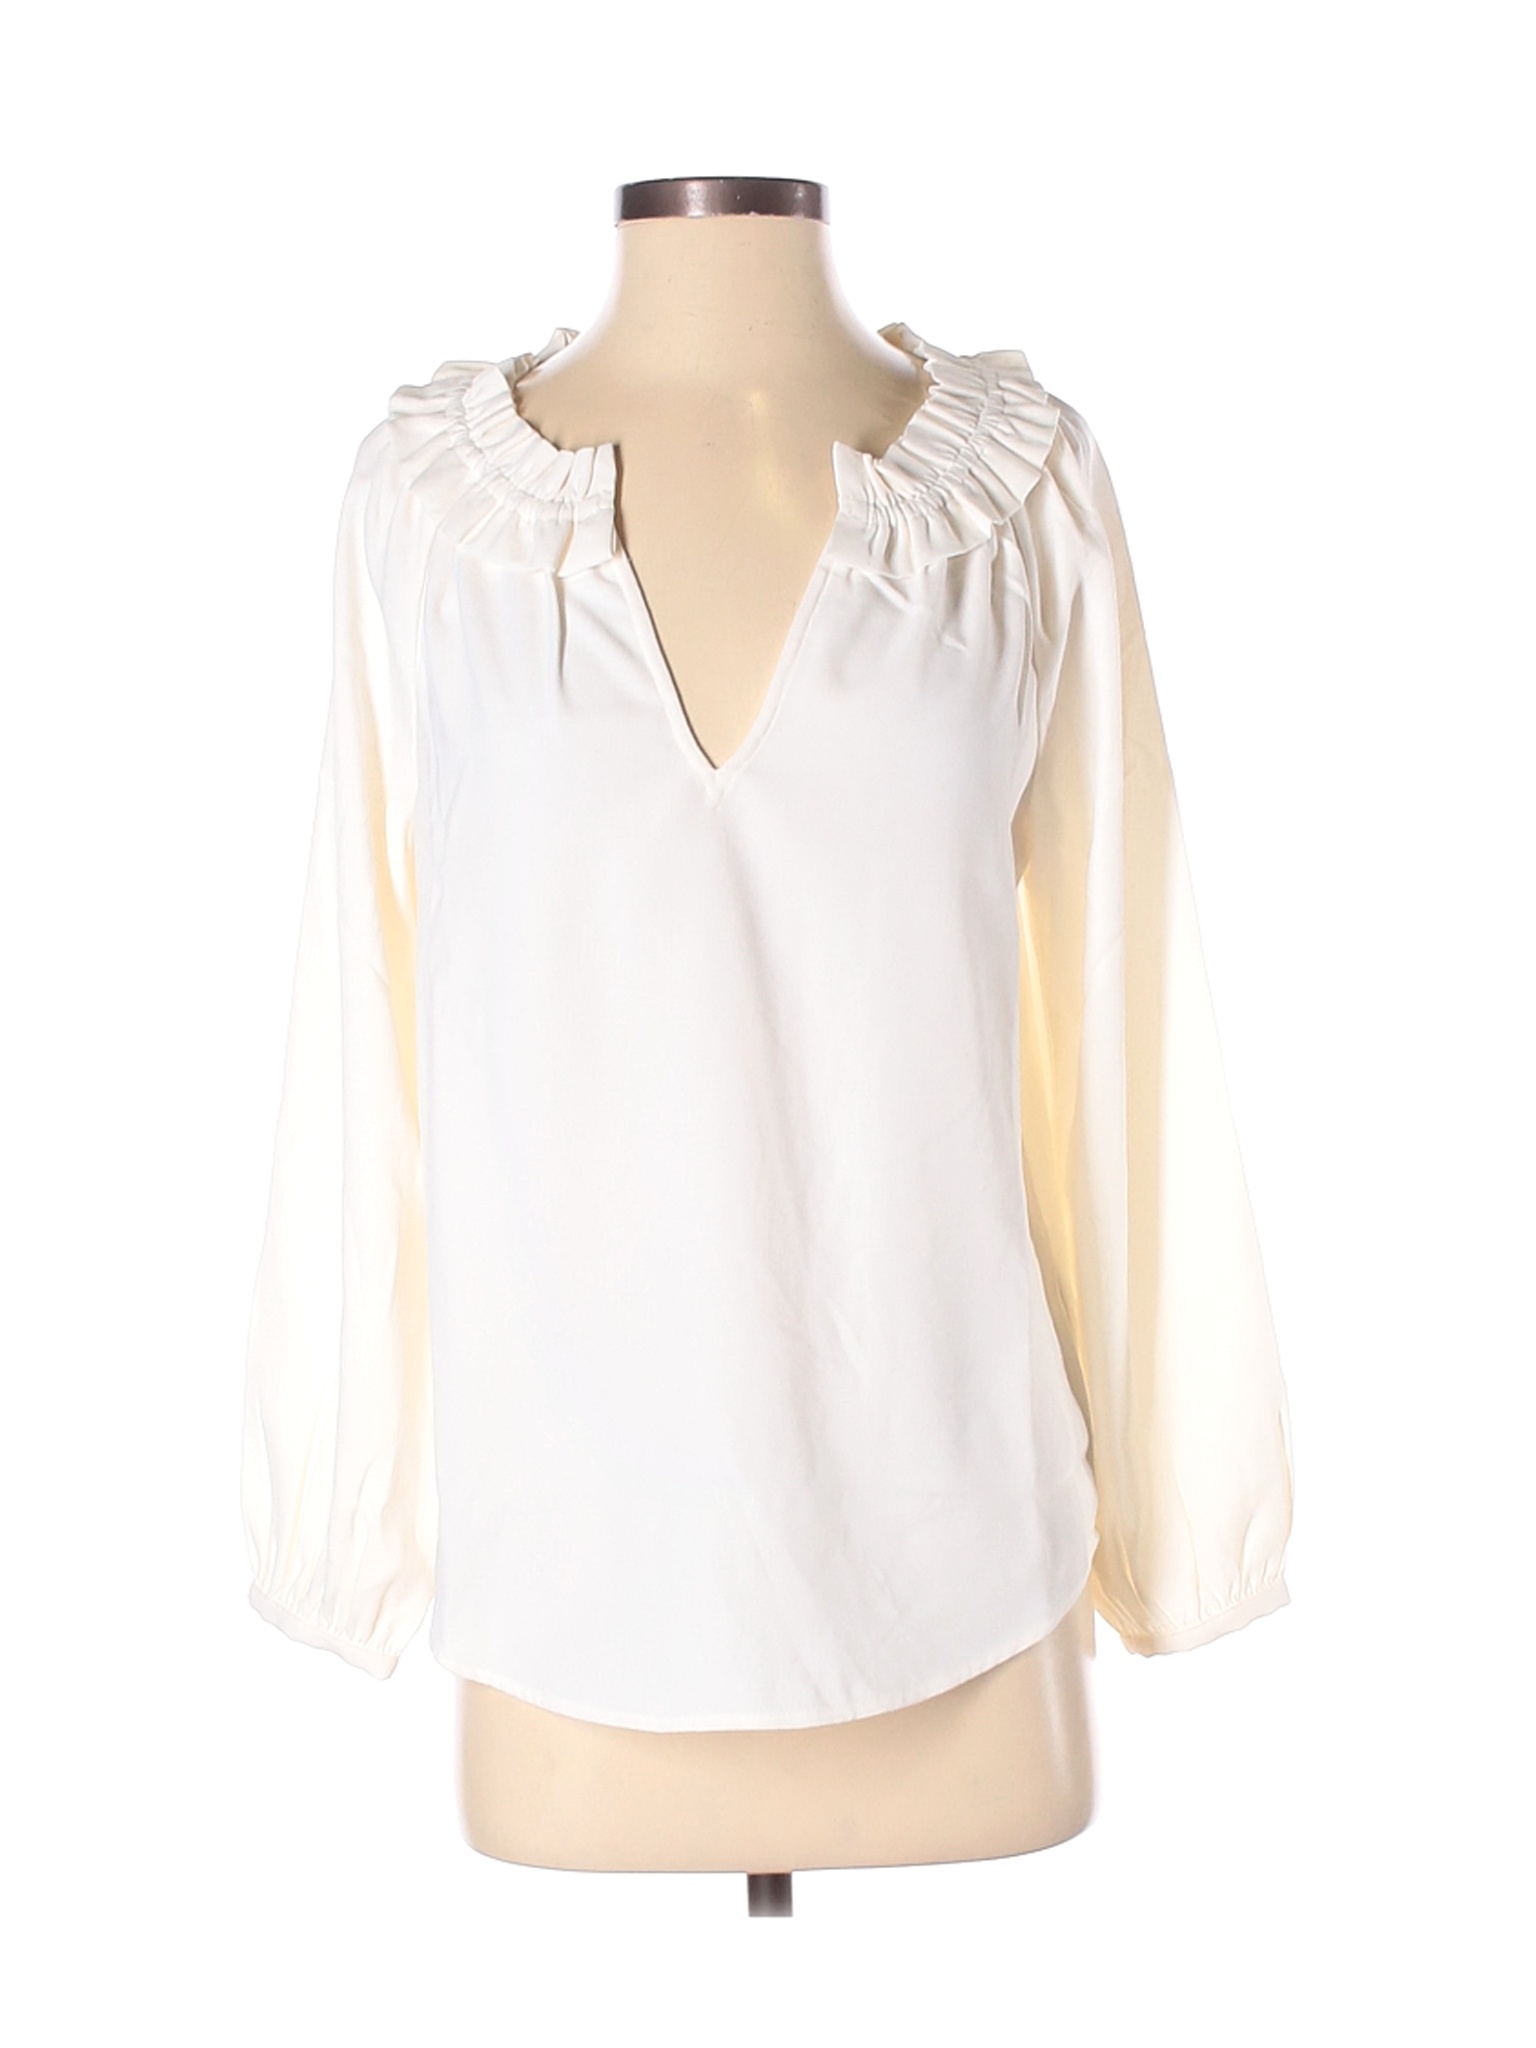 NWT J.Crew Women White Long Sleeve Blouse XS | eBay